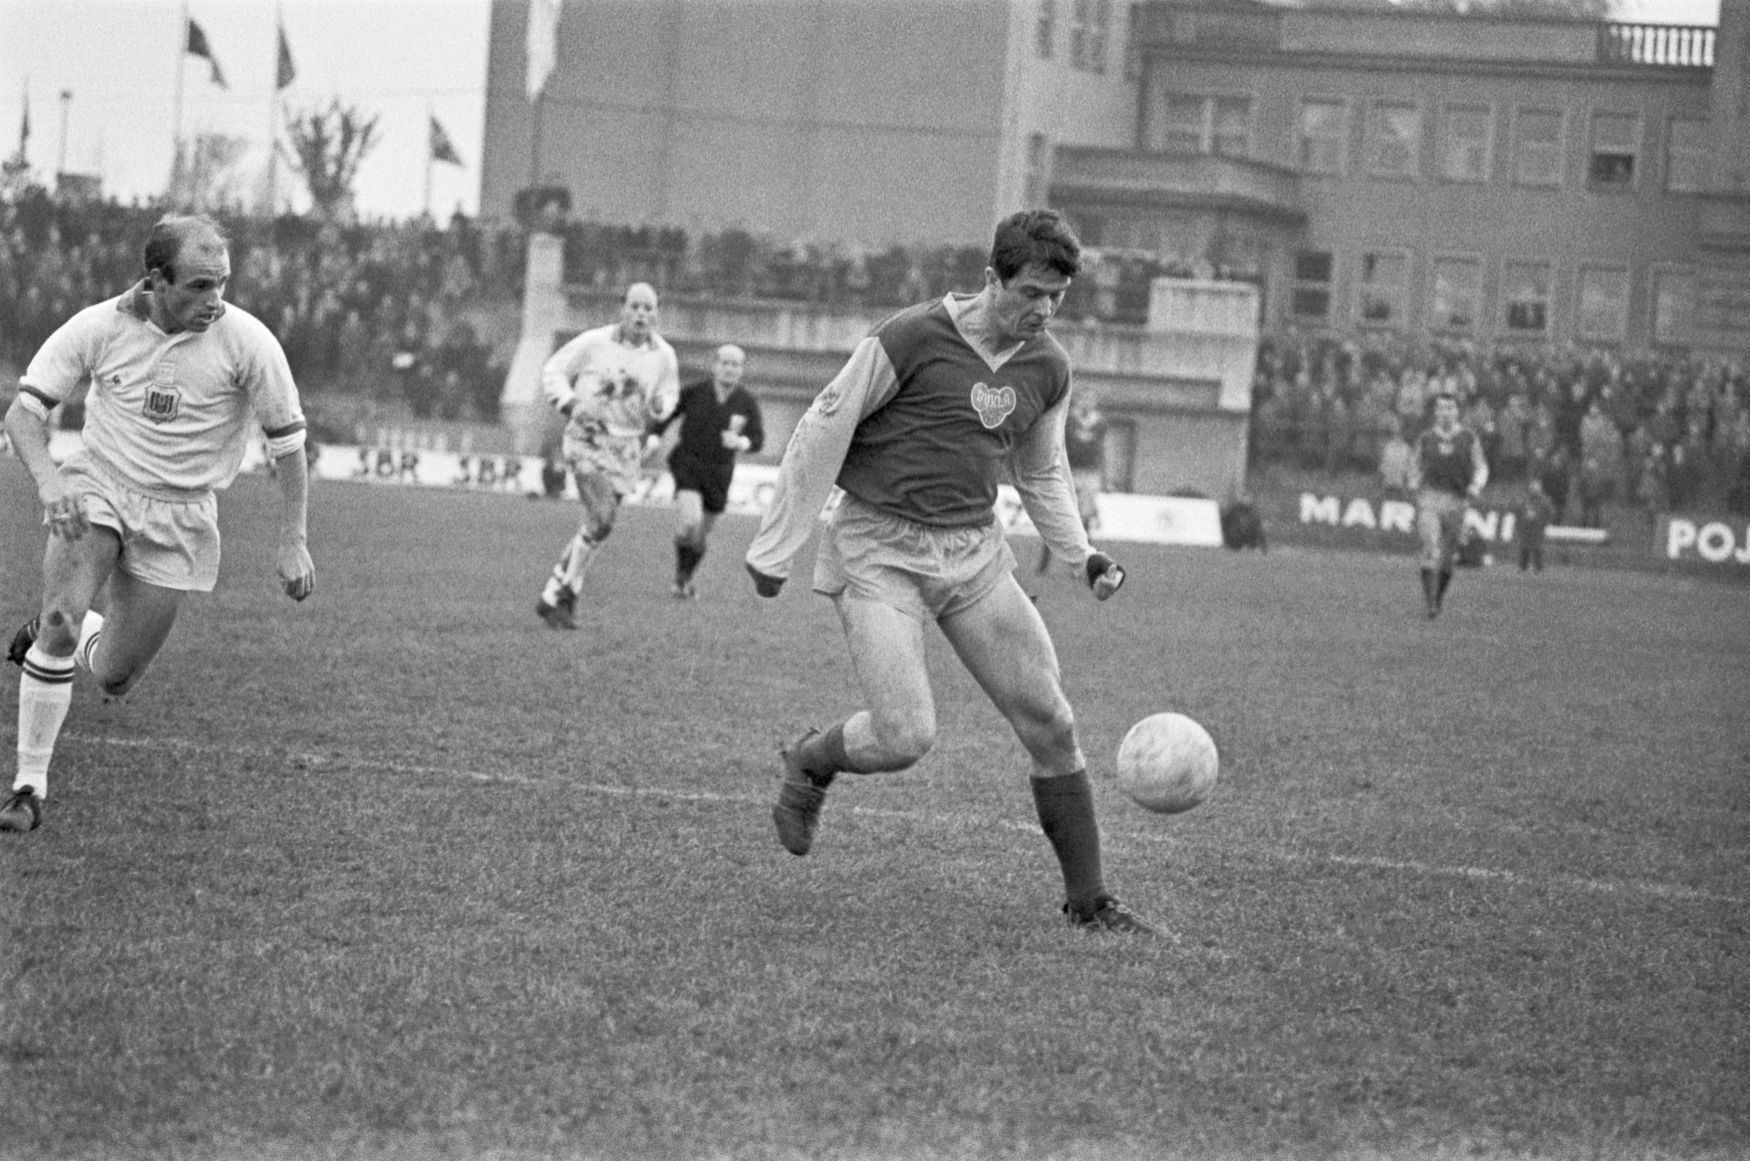 Ivan Mráz v zápase s Anderlechtem (1966)